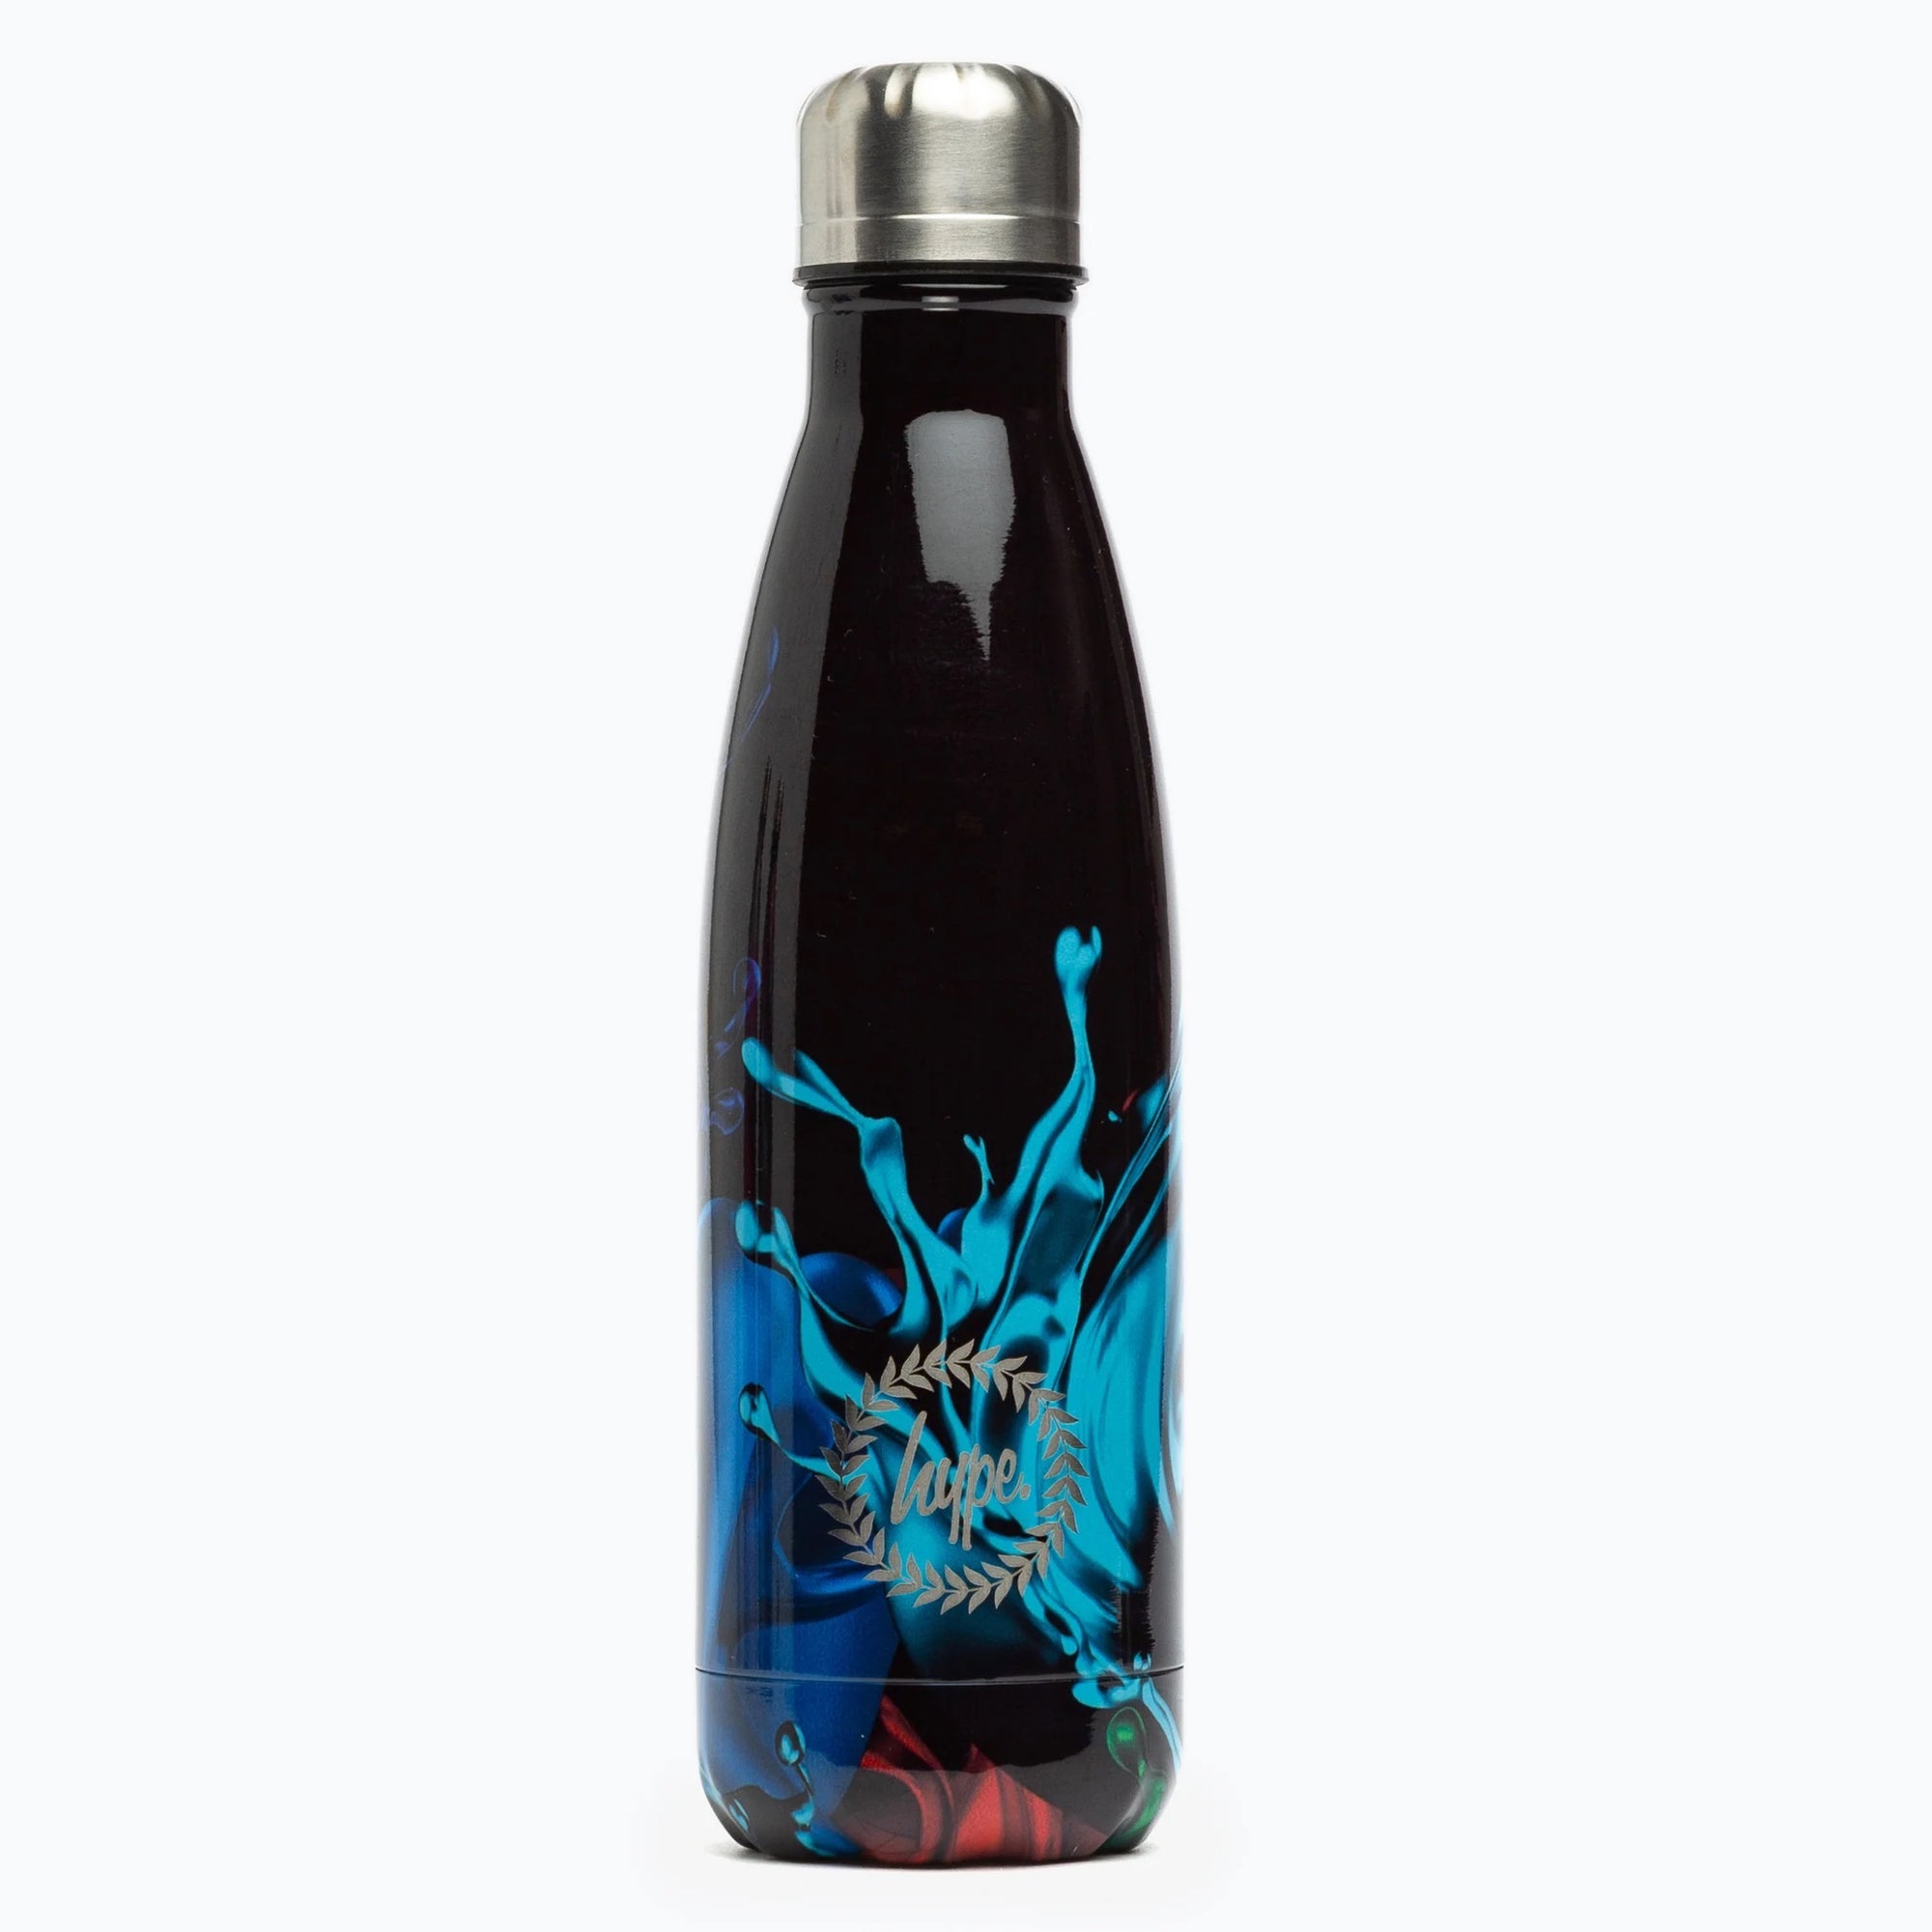 Hype Black Liquid Drips Bottle Xucb-318 Accessories ONE SIZE / Multi